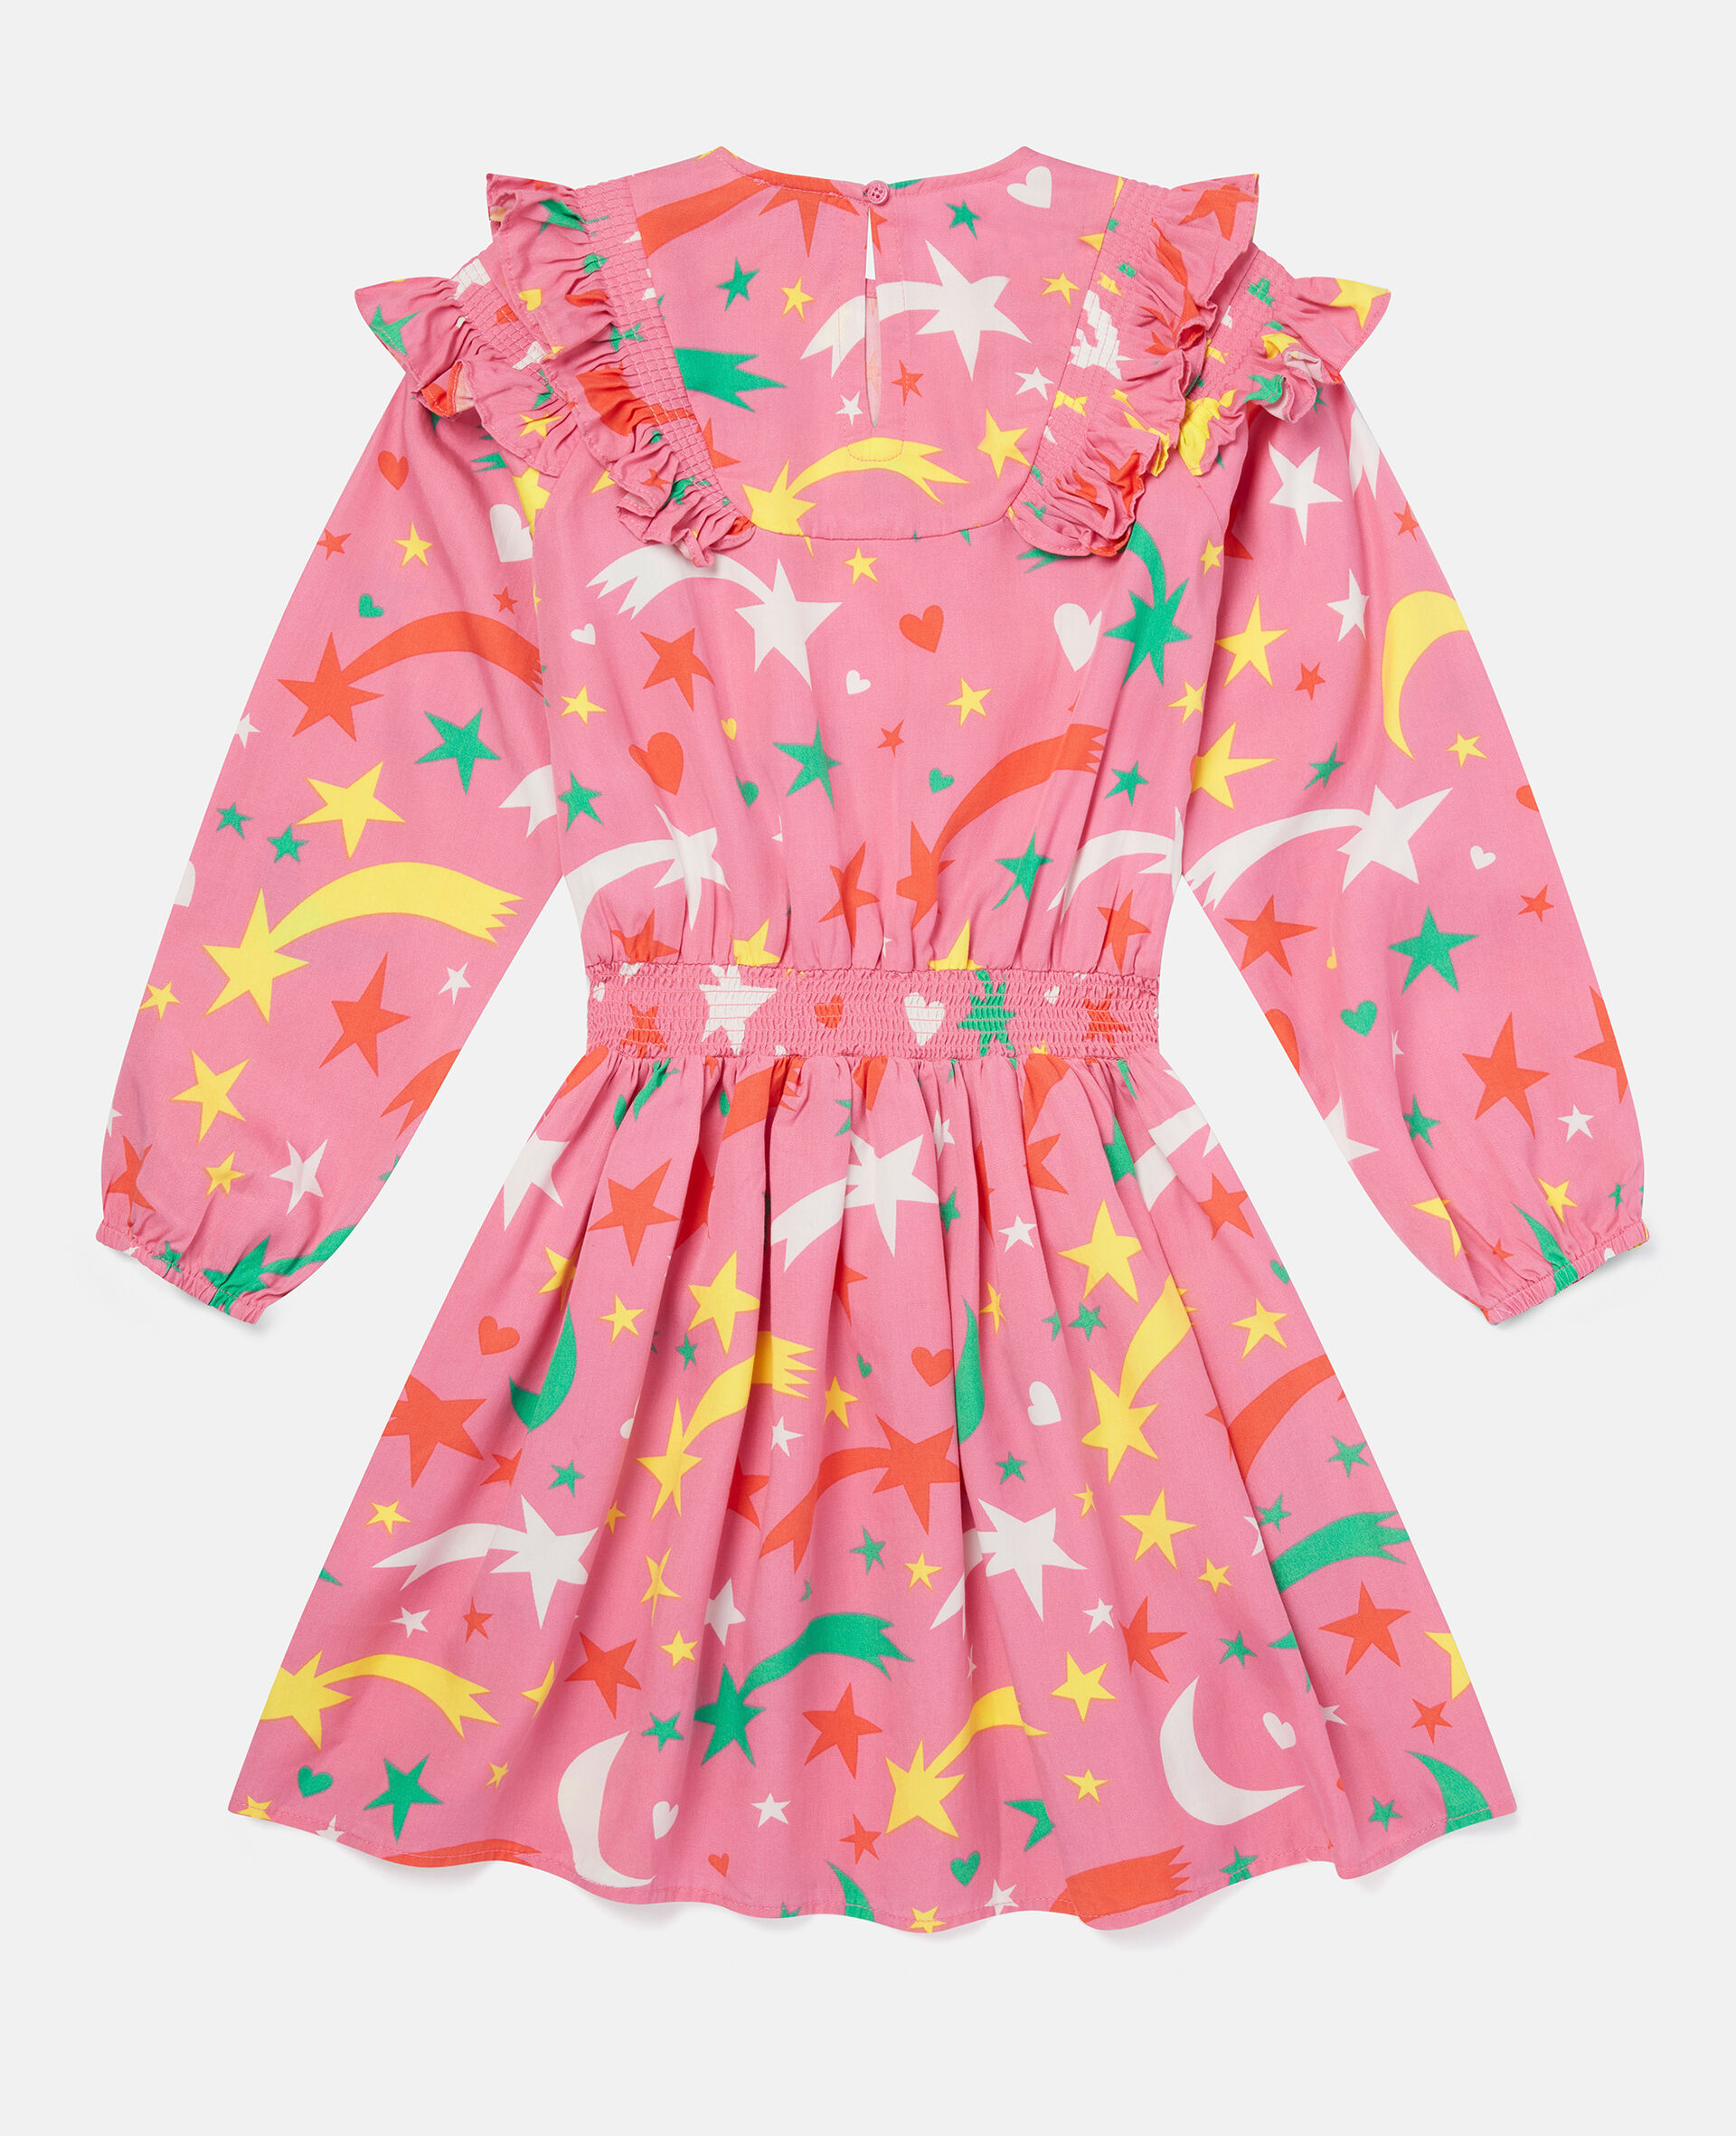 Shooting Star Print Frill Dress-Pink-large image number 3